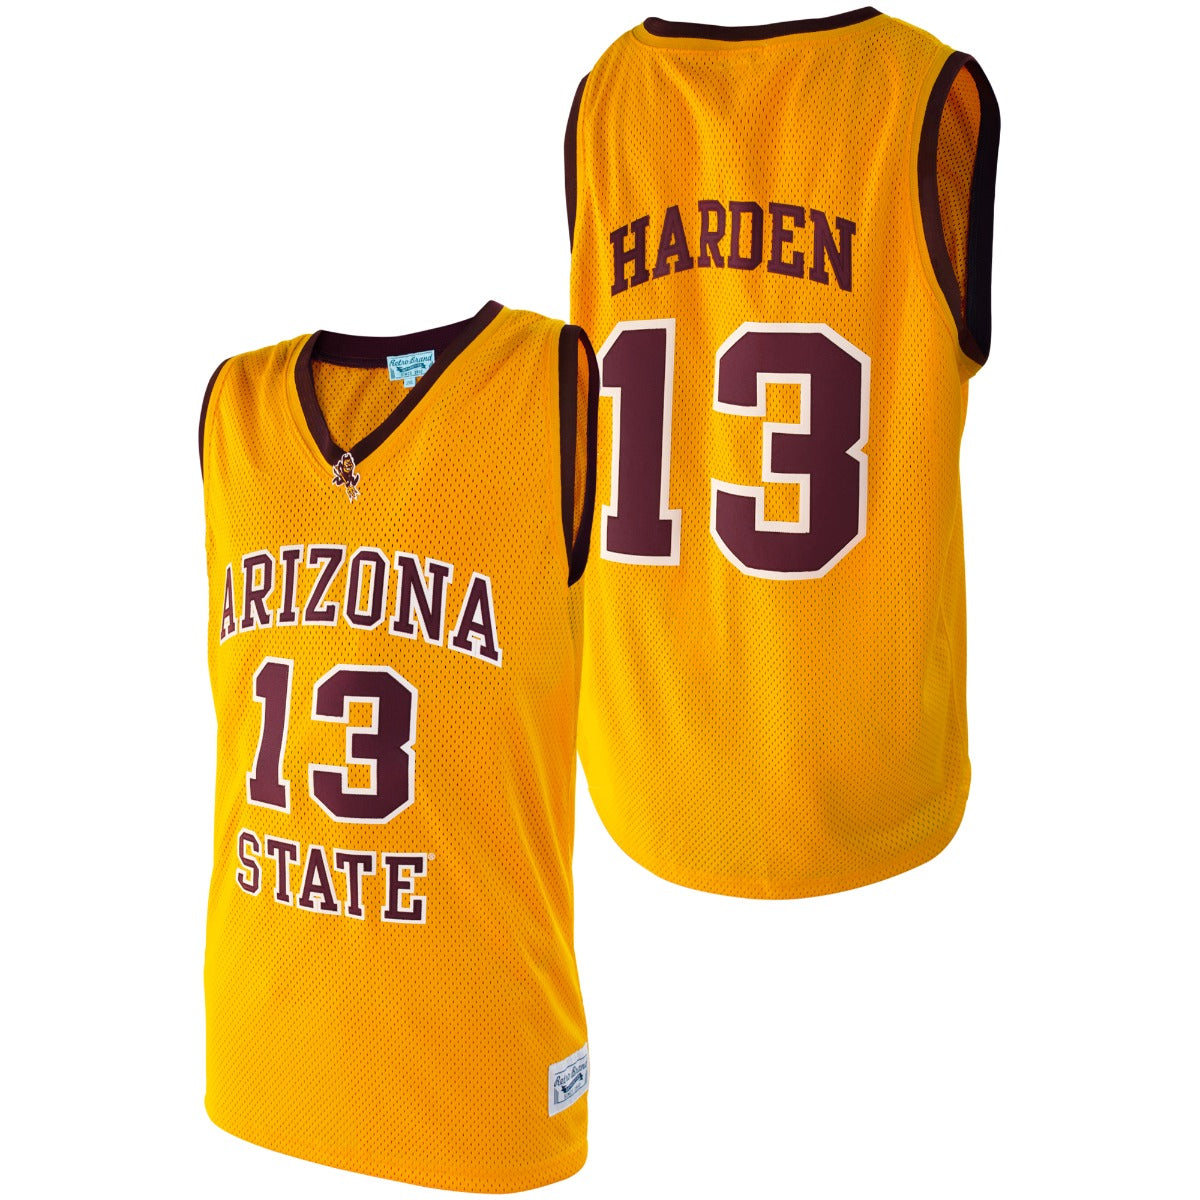 James Harden NBA Jerseys, NBA Jersey, NBA Uniforms